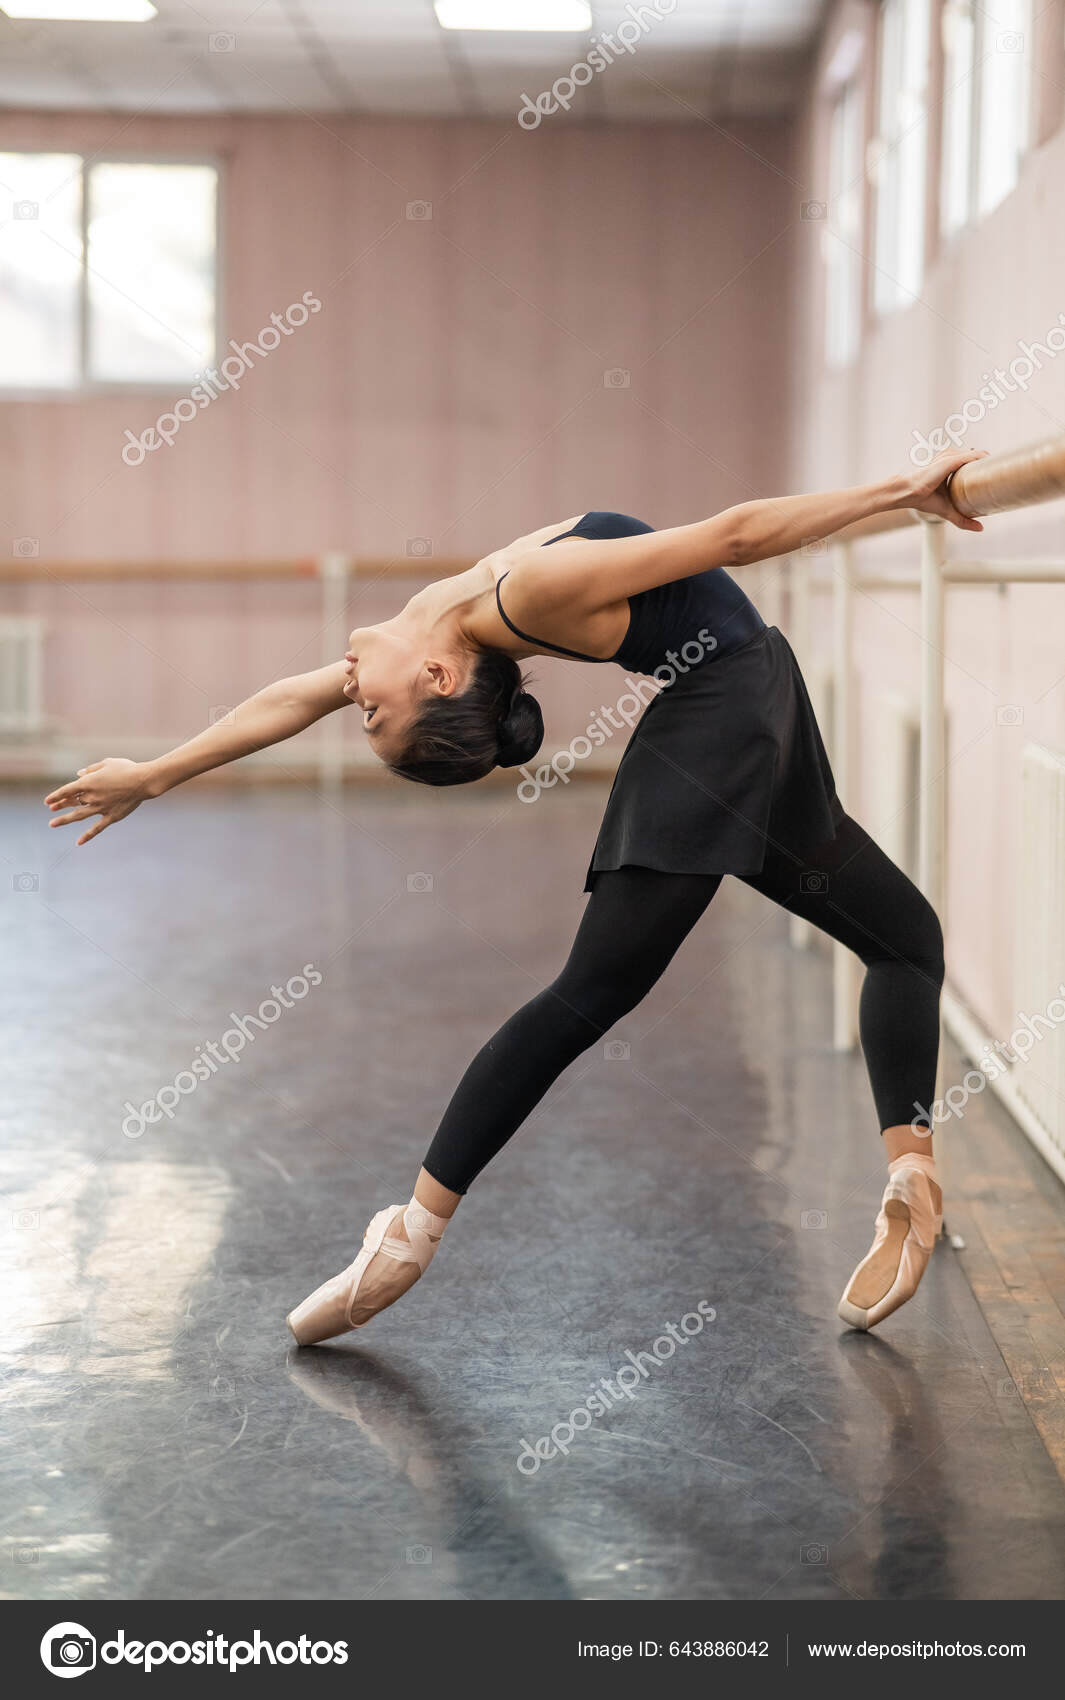 https://st5.depositphotos.com/1516574/64388/i/1600/depositphotos_643886042-stock-photo-asian-woman-doing-back-flexibility.jpg